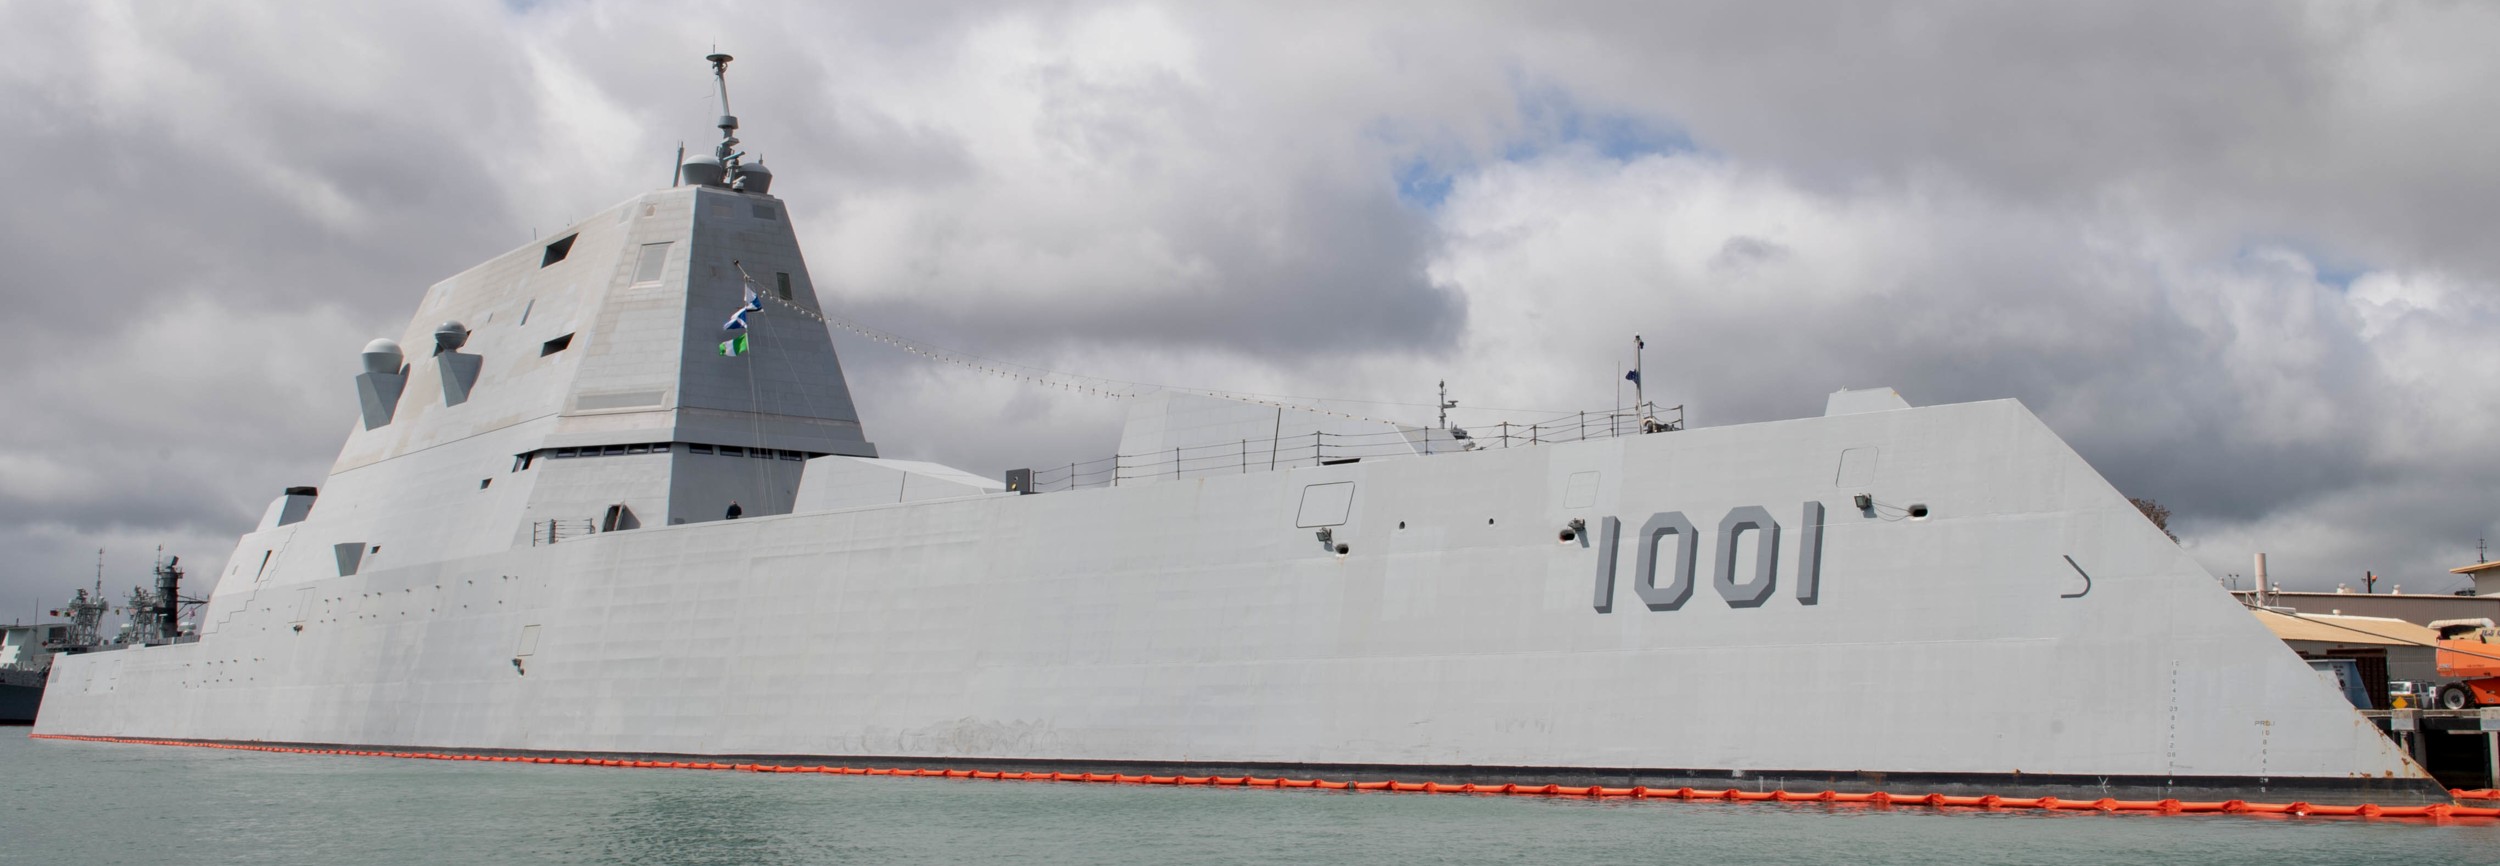 ddg-1001 uss michael monsoor zumwalt class guided missile destroyer us navy joint base pearl harbor hickam hawaii rimpac 40